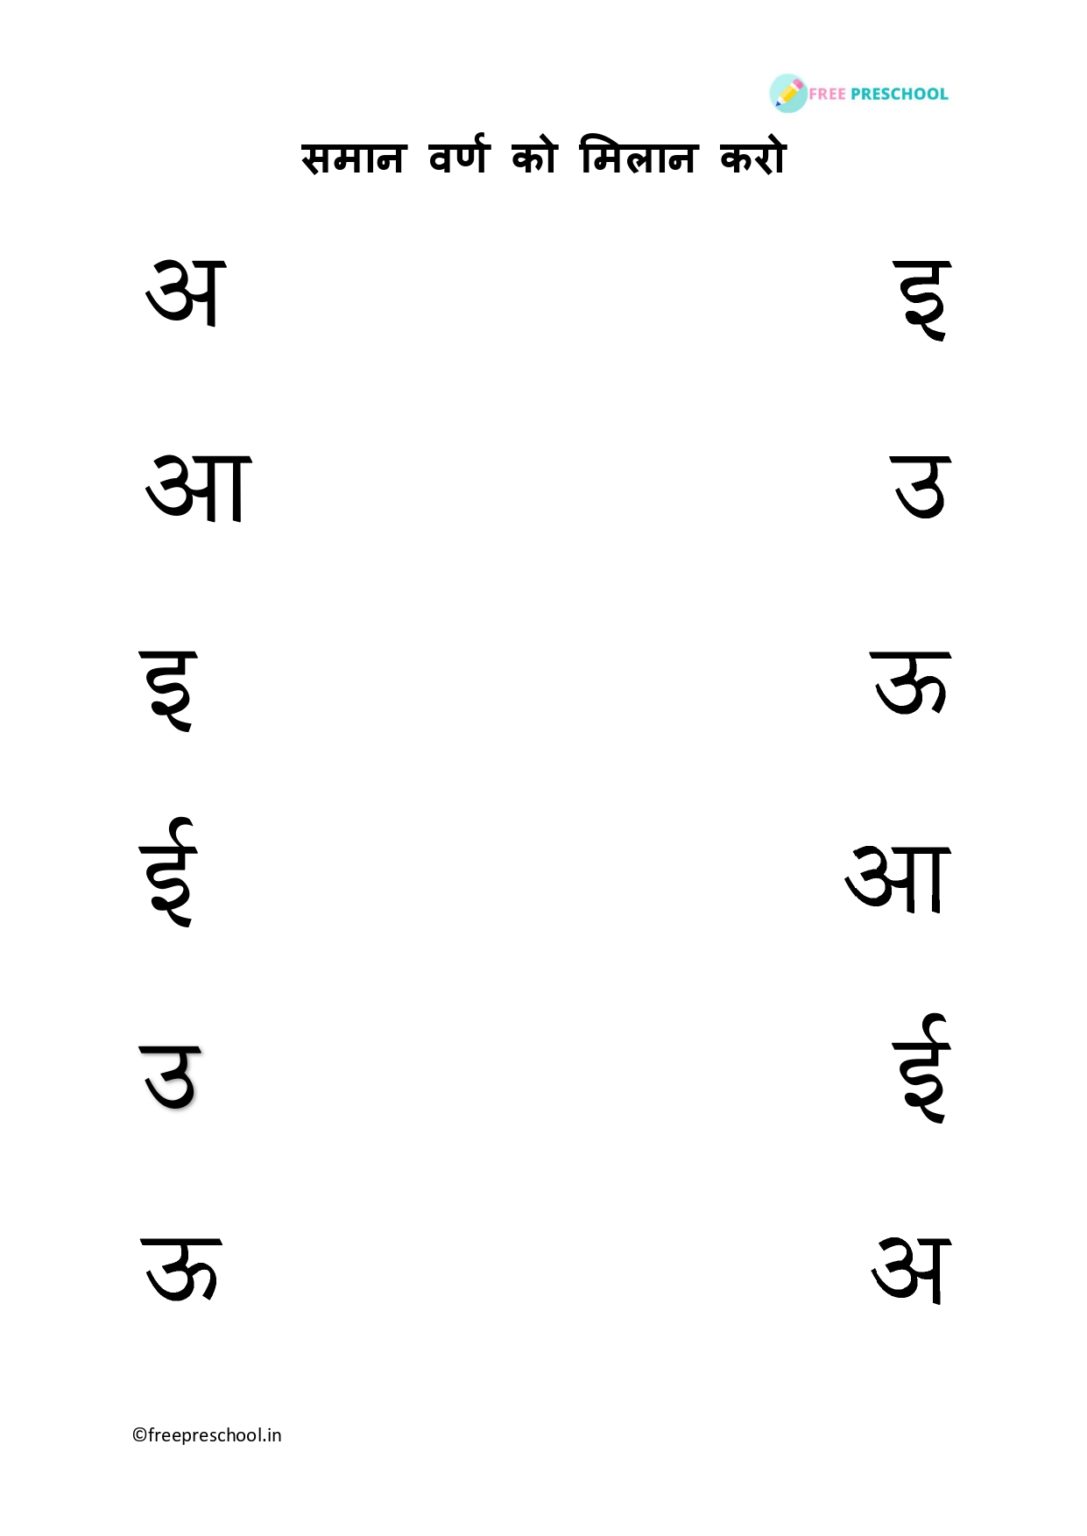 Hindi Worksheets MATCHING - Free Preschool